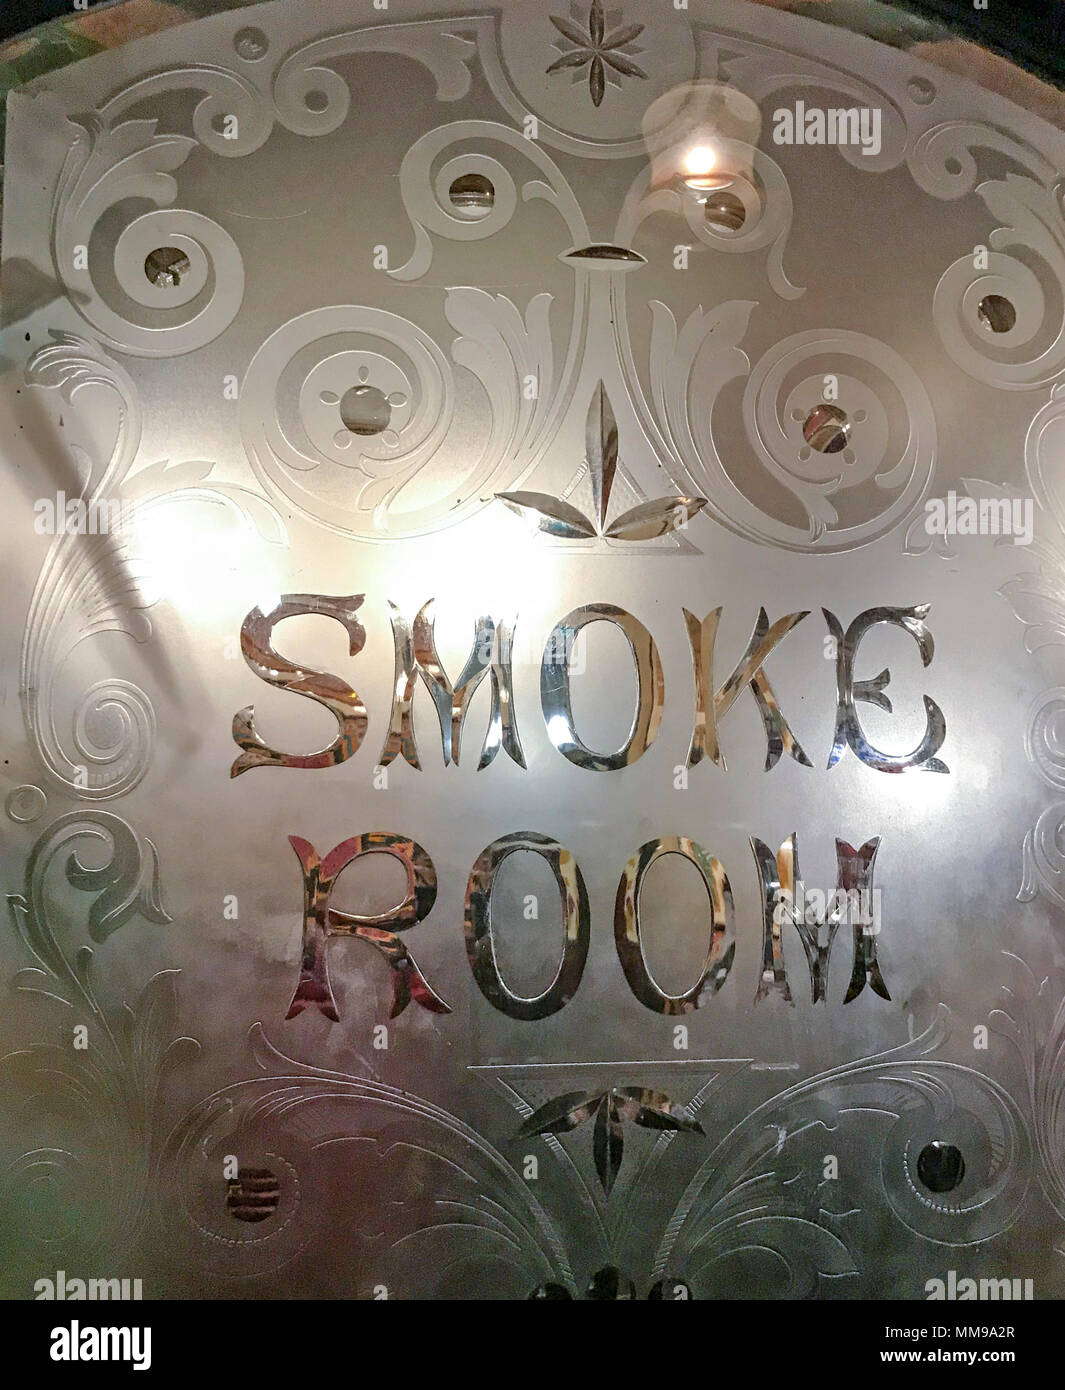 Smoke room door, Bartons Arms, Aston, Birmingham, West Midlands, England, UK, B6 4UP Stock Photo